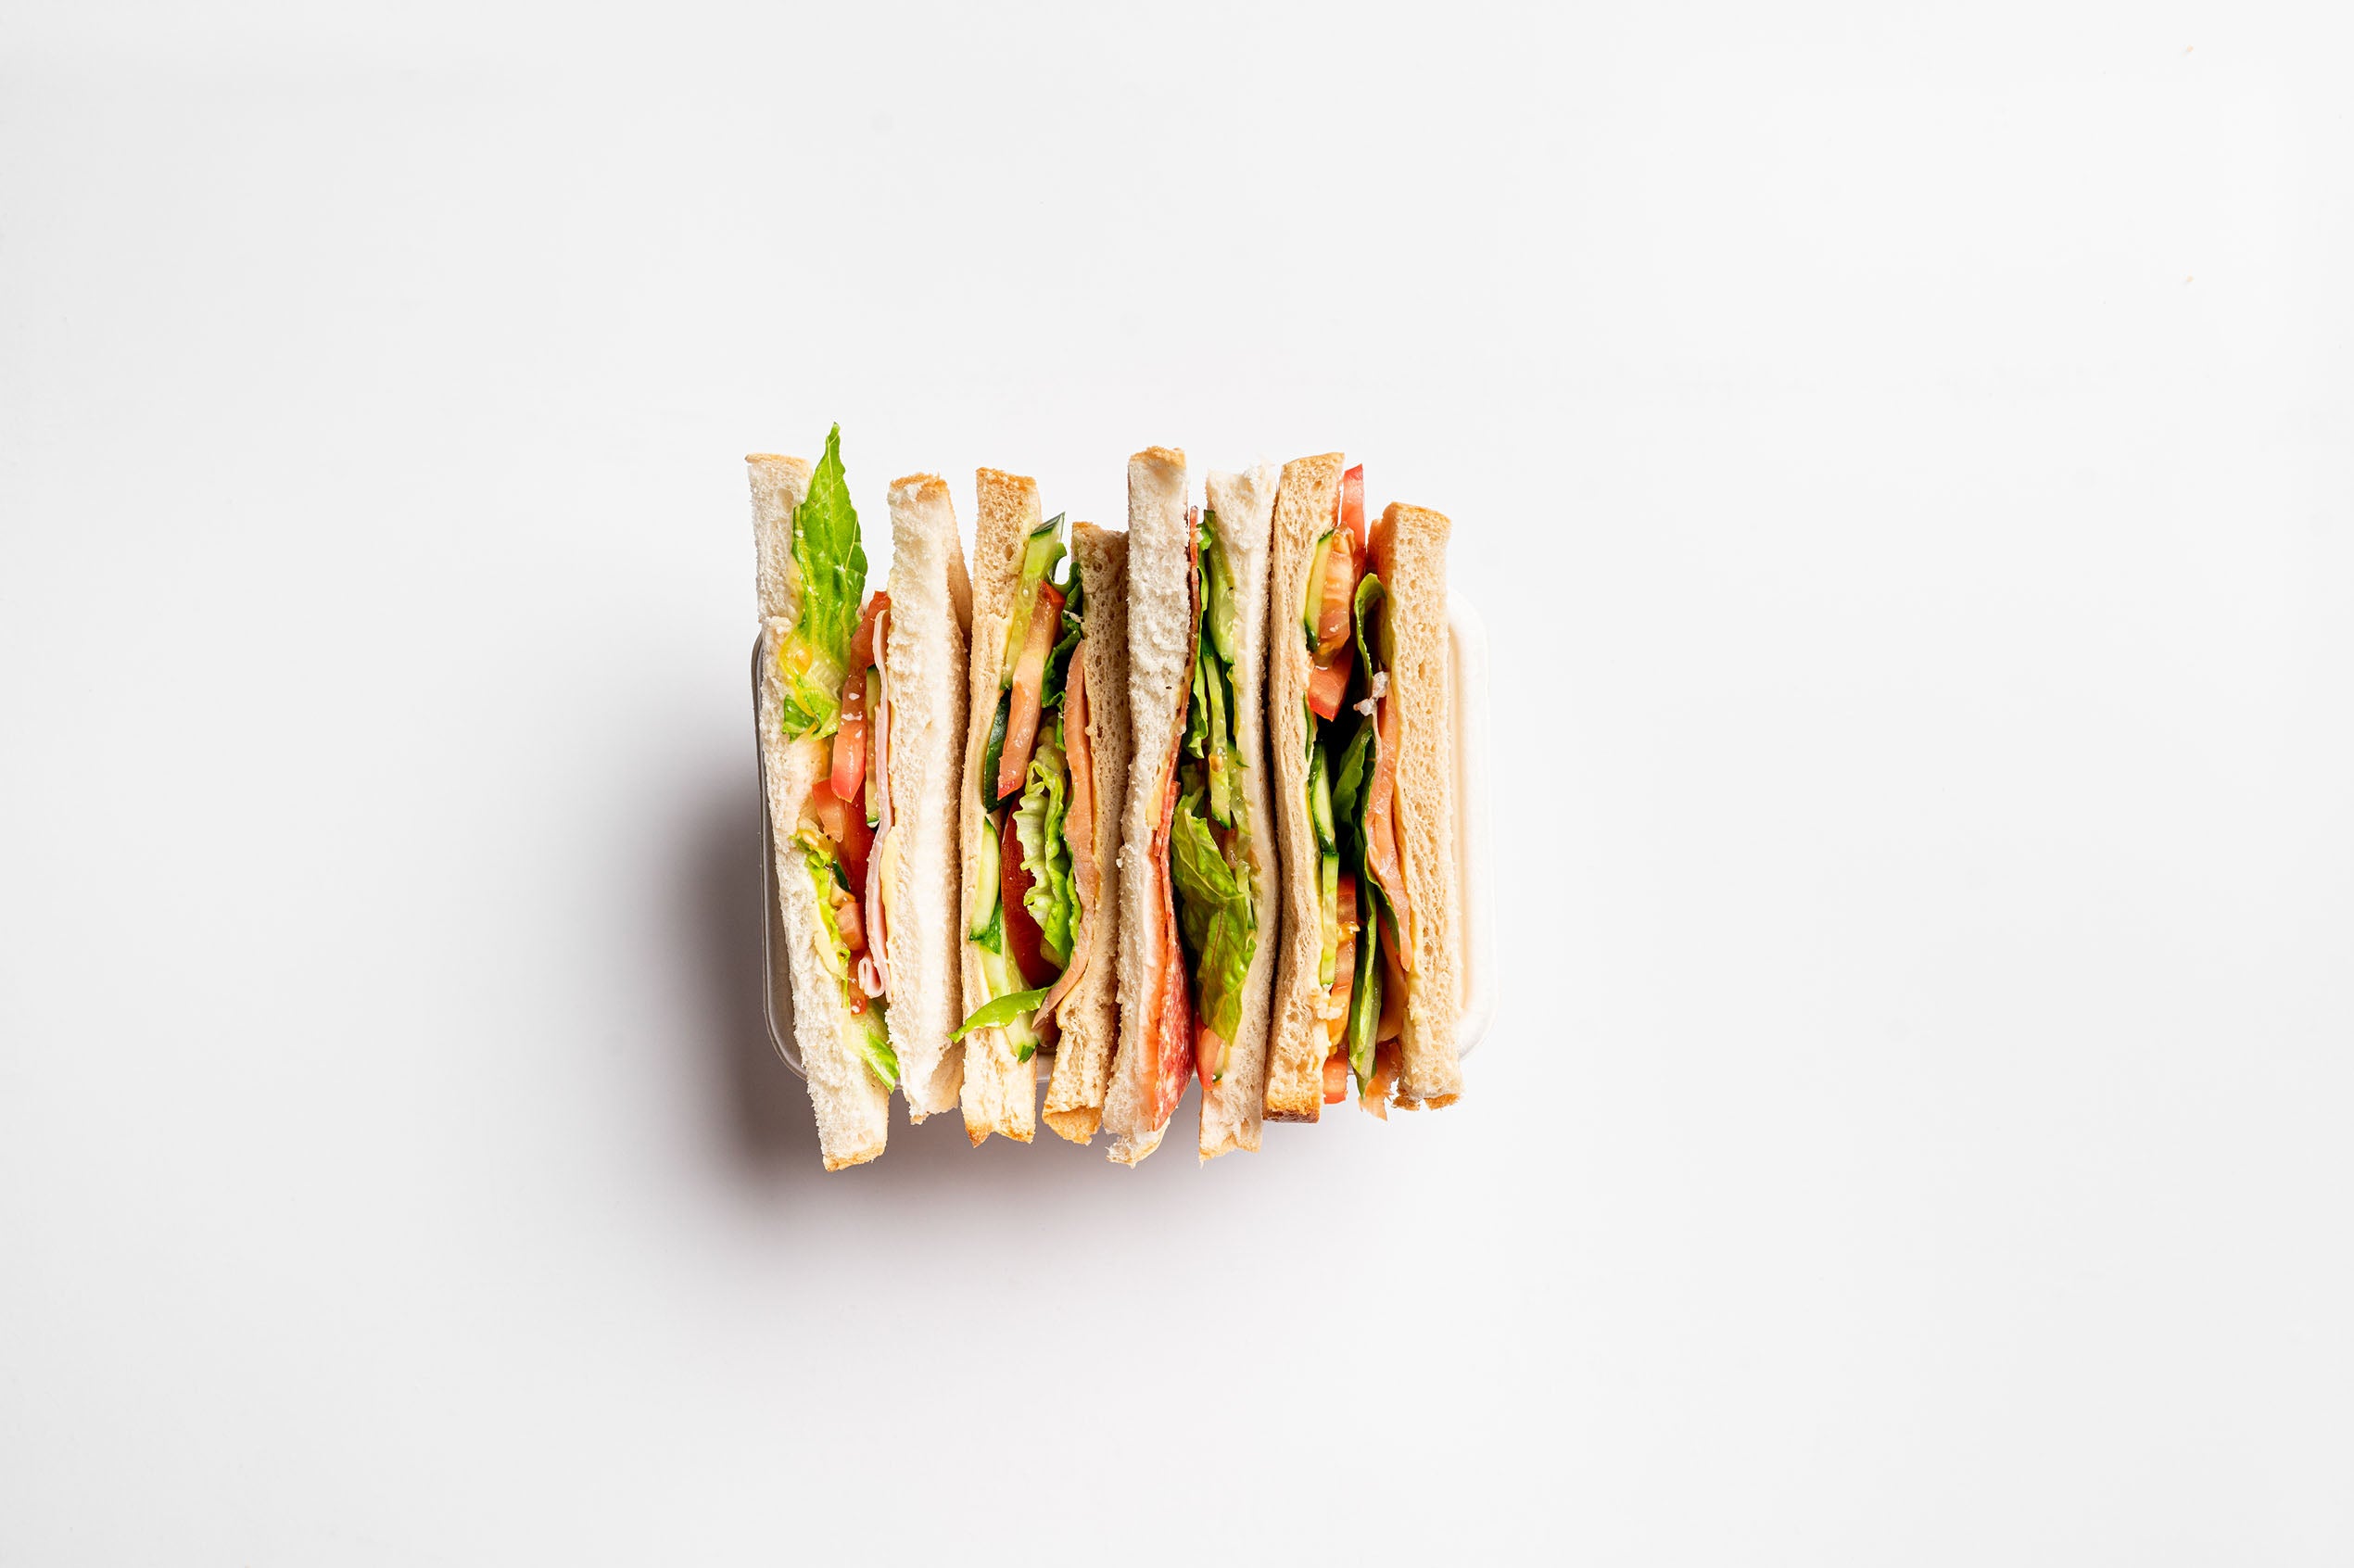 Executive Point Sandwiches - Smoked Salmon and Sour Cream